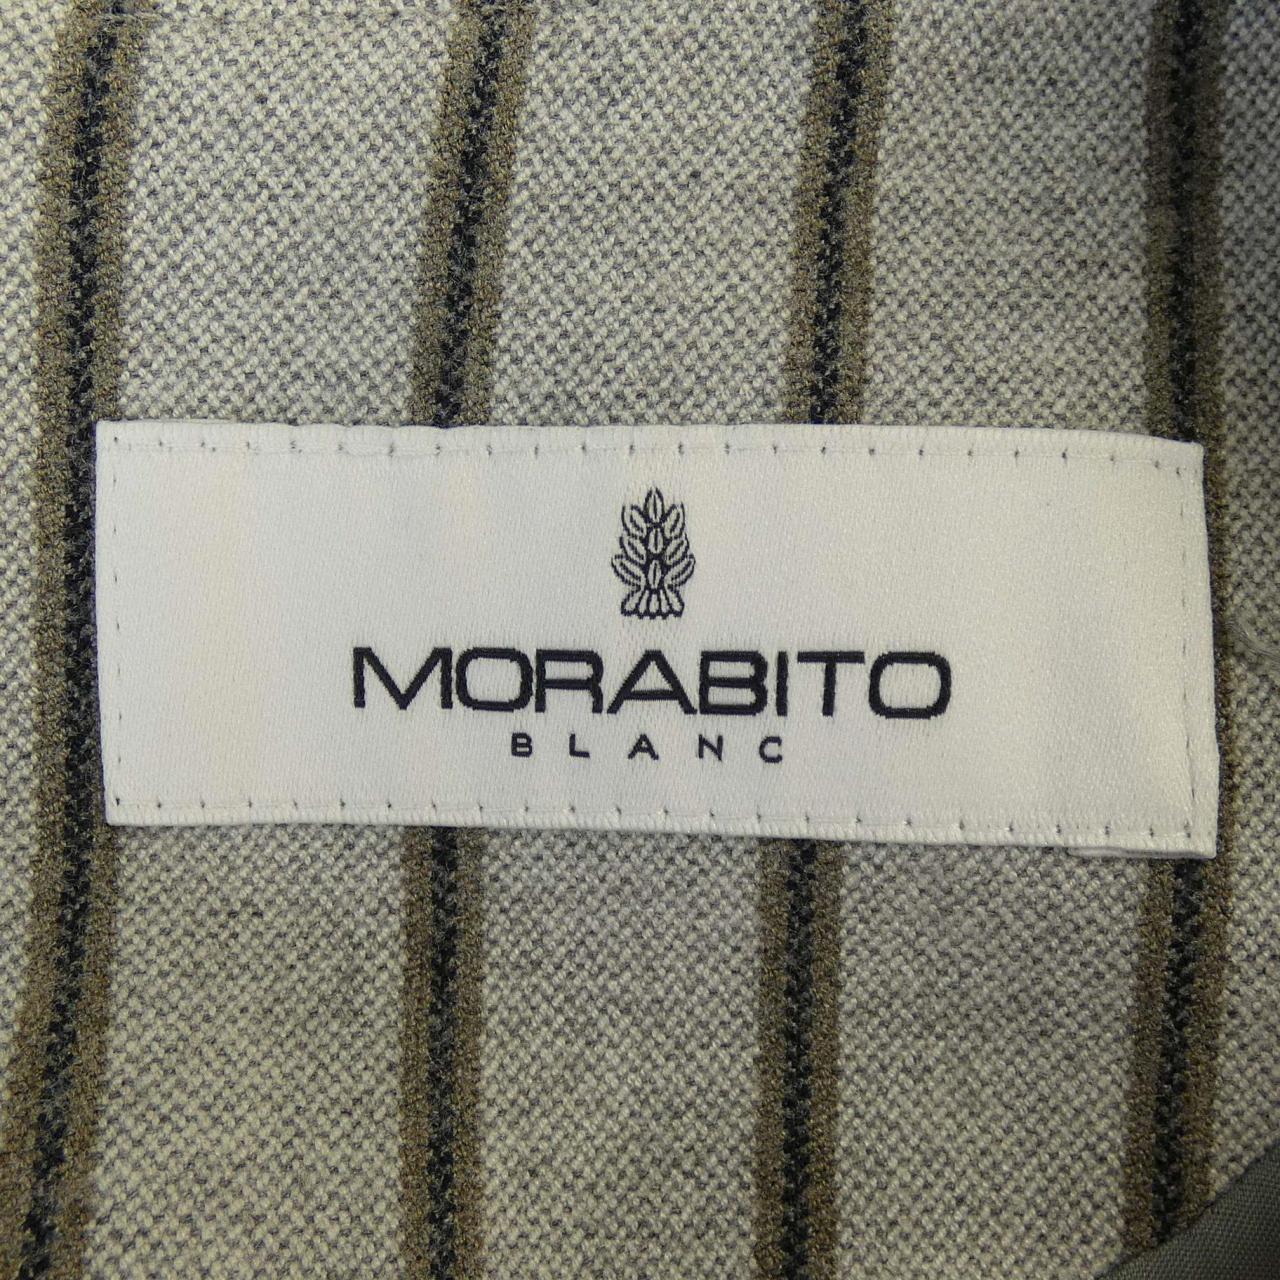 MORABITO BLANC ワンピース 40